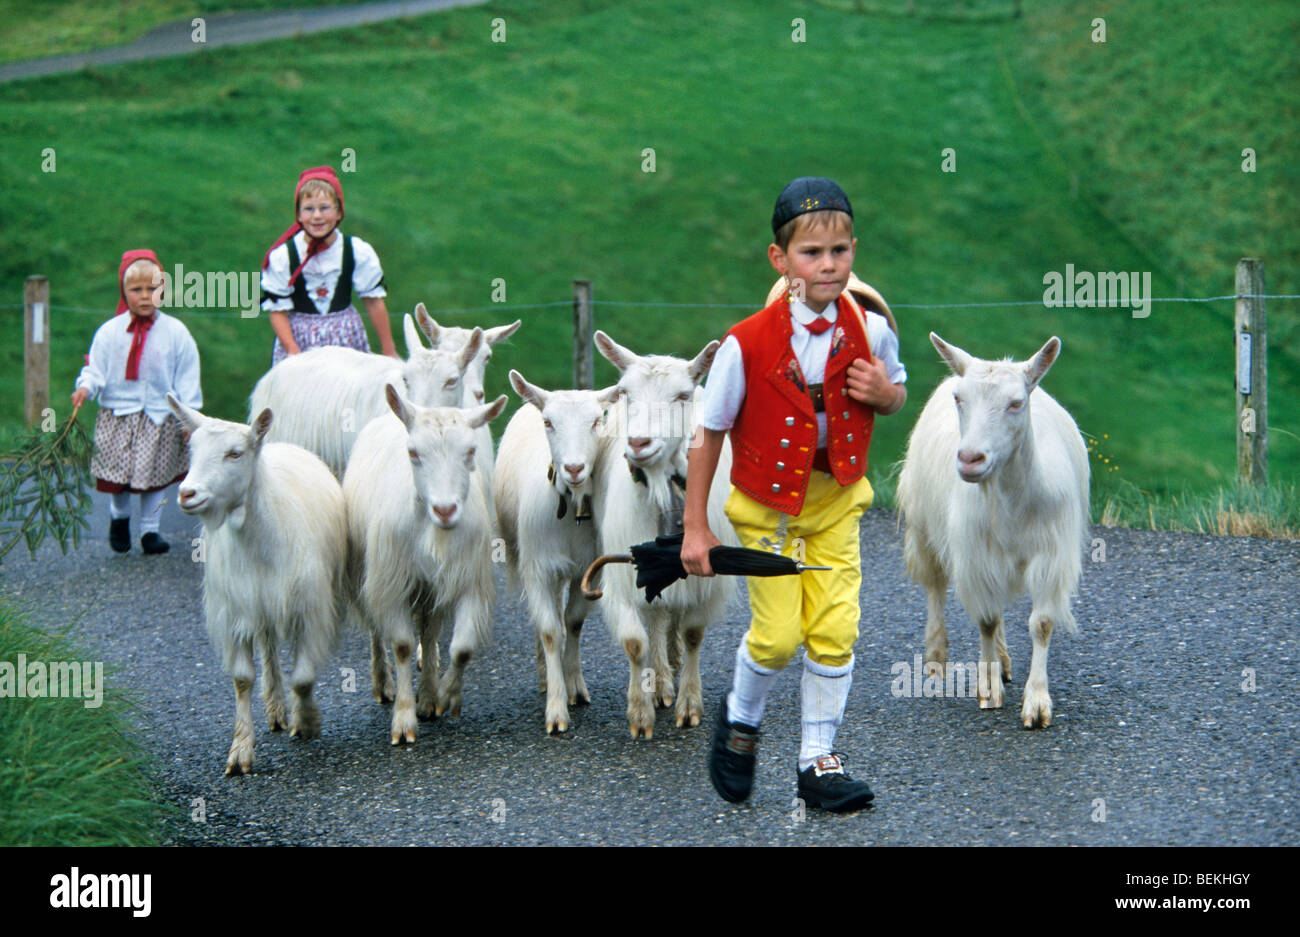 Children in traditional costumes herding goats (Capra hircus), Alpaufzug, Appenzell, Switzerland Stock Photo